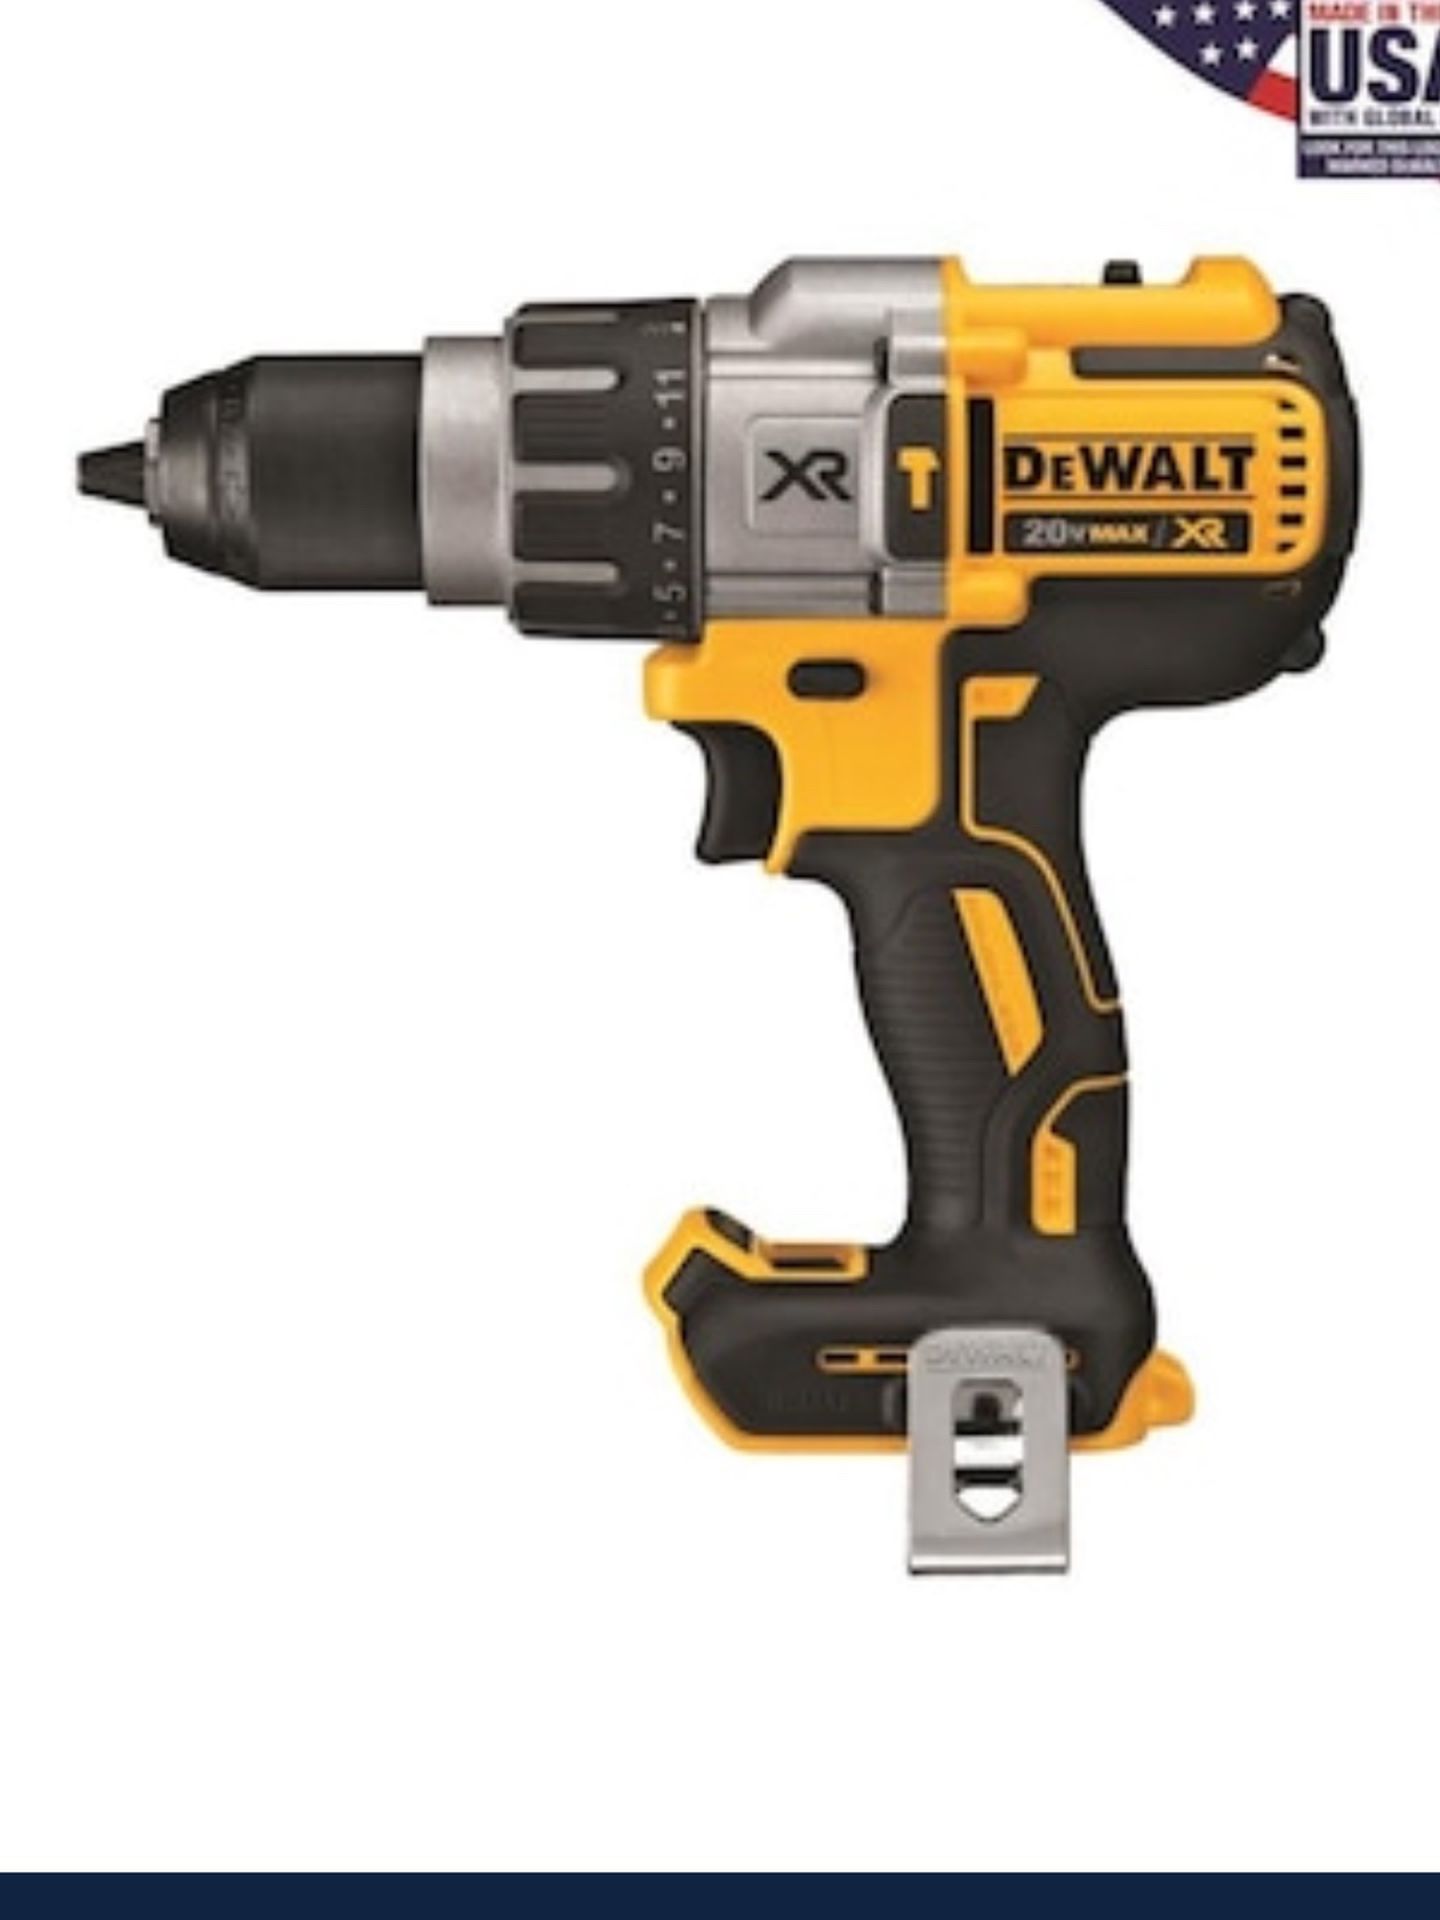 Dewalt 1/2in 20v Brushless Cordless Hammer Drill ( New ) Tool Only No Battery